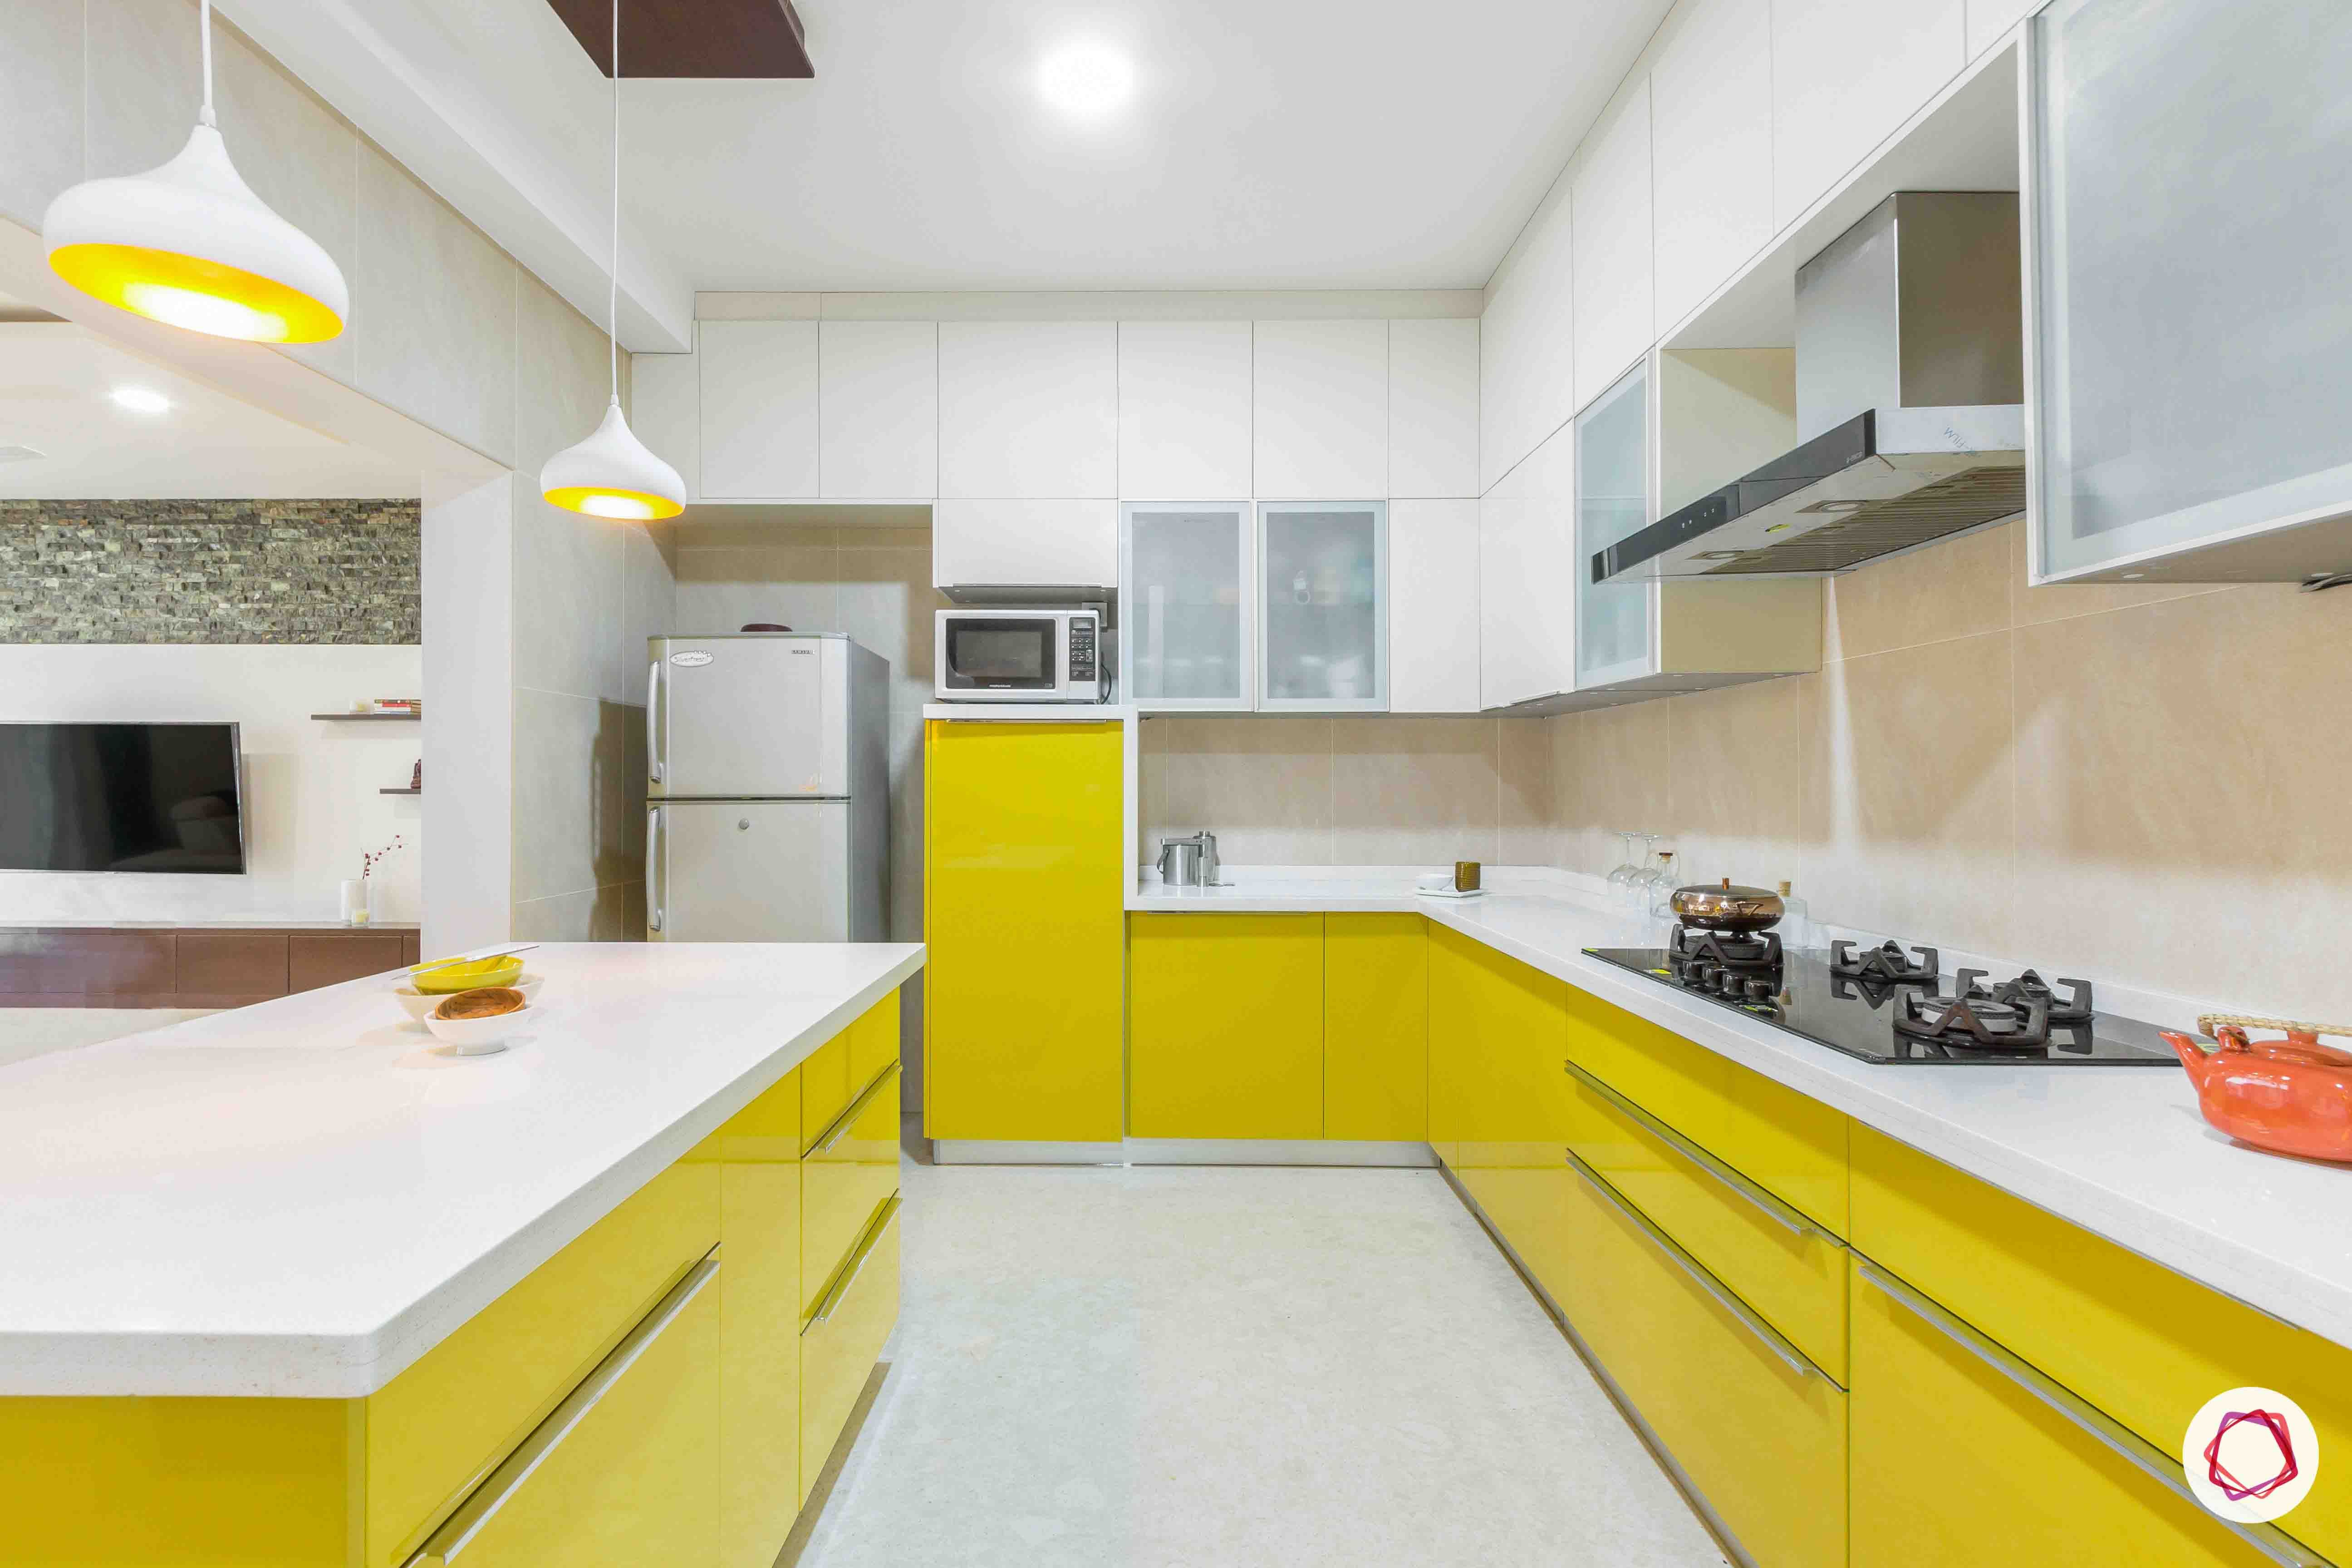 kitchen colors-yellow kitchen designs-white kitchen countertop designs